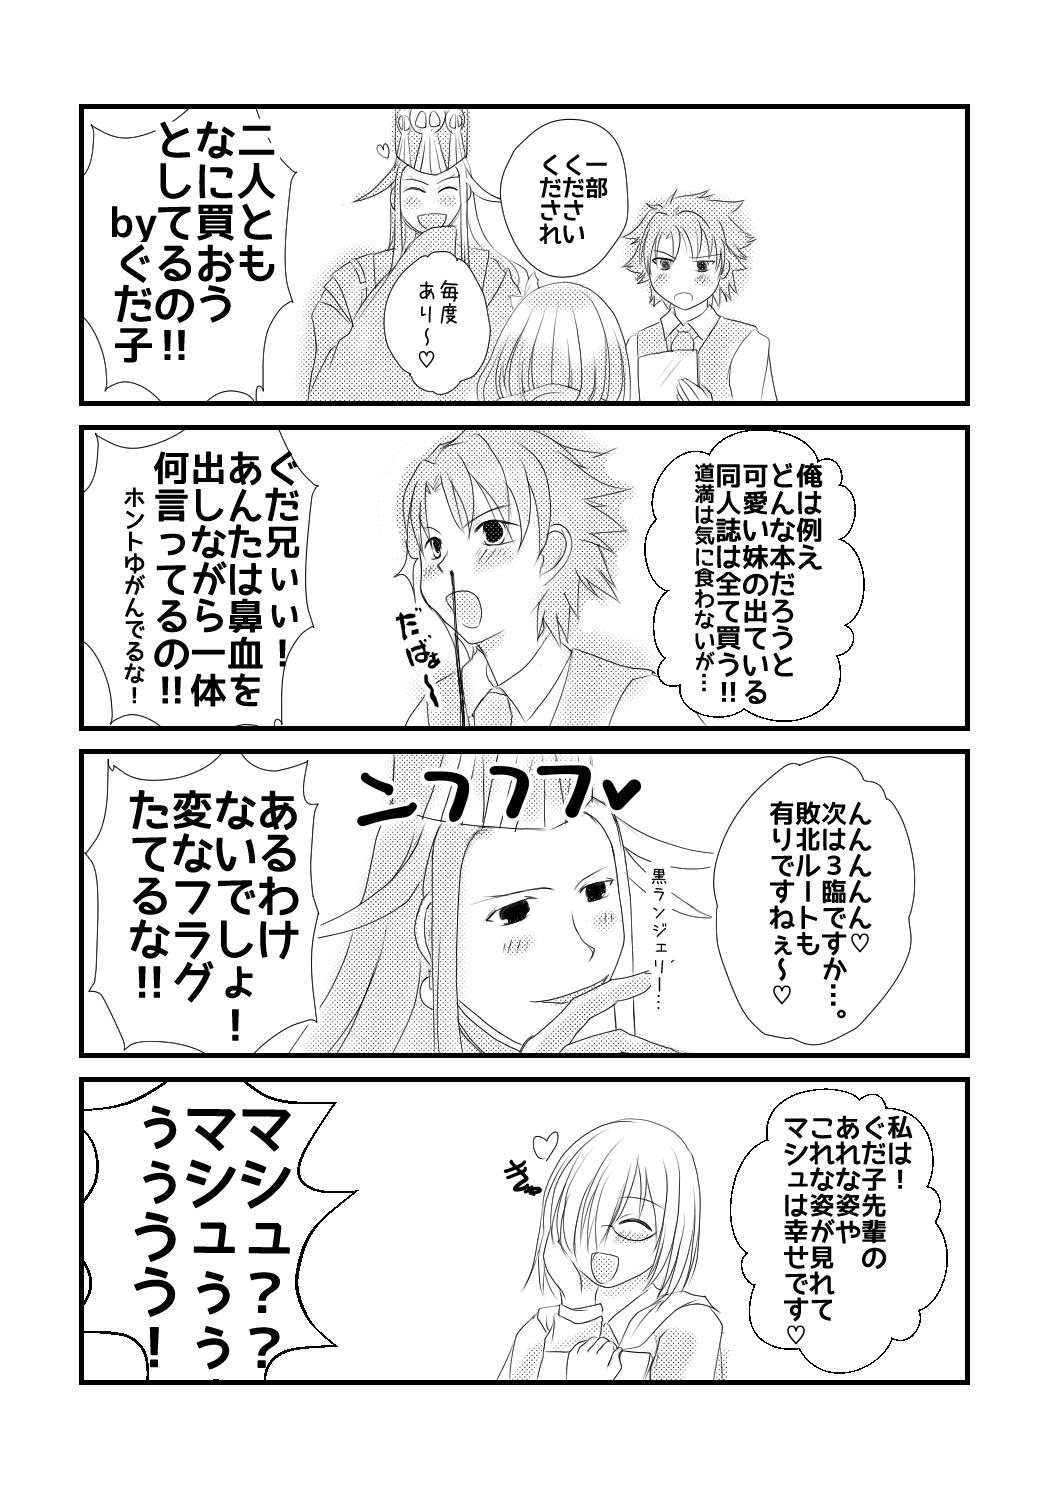 Thong ] Rin guda ♀ rakugaki guda yuru manga(Fate/Grand Order] - Fate grand order Fetish - Page 7